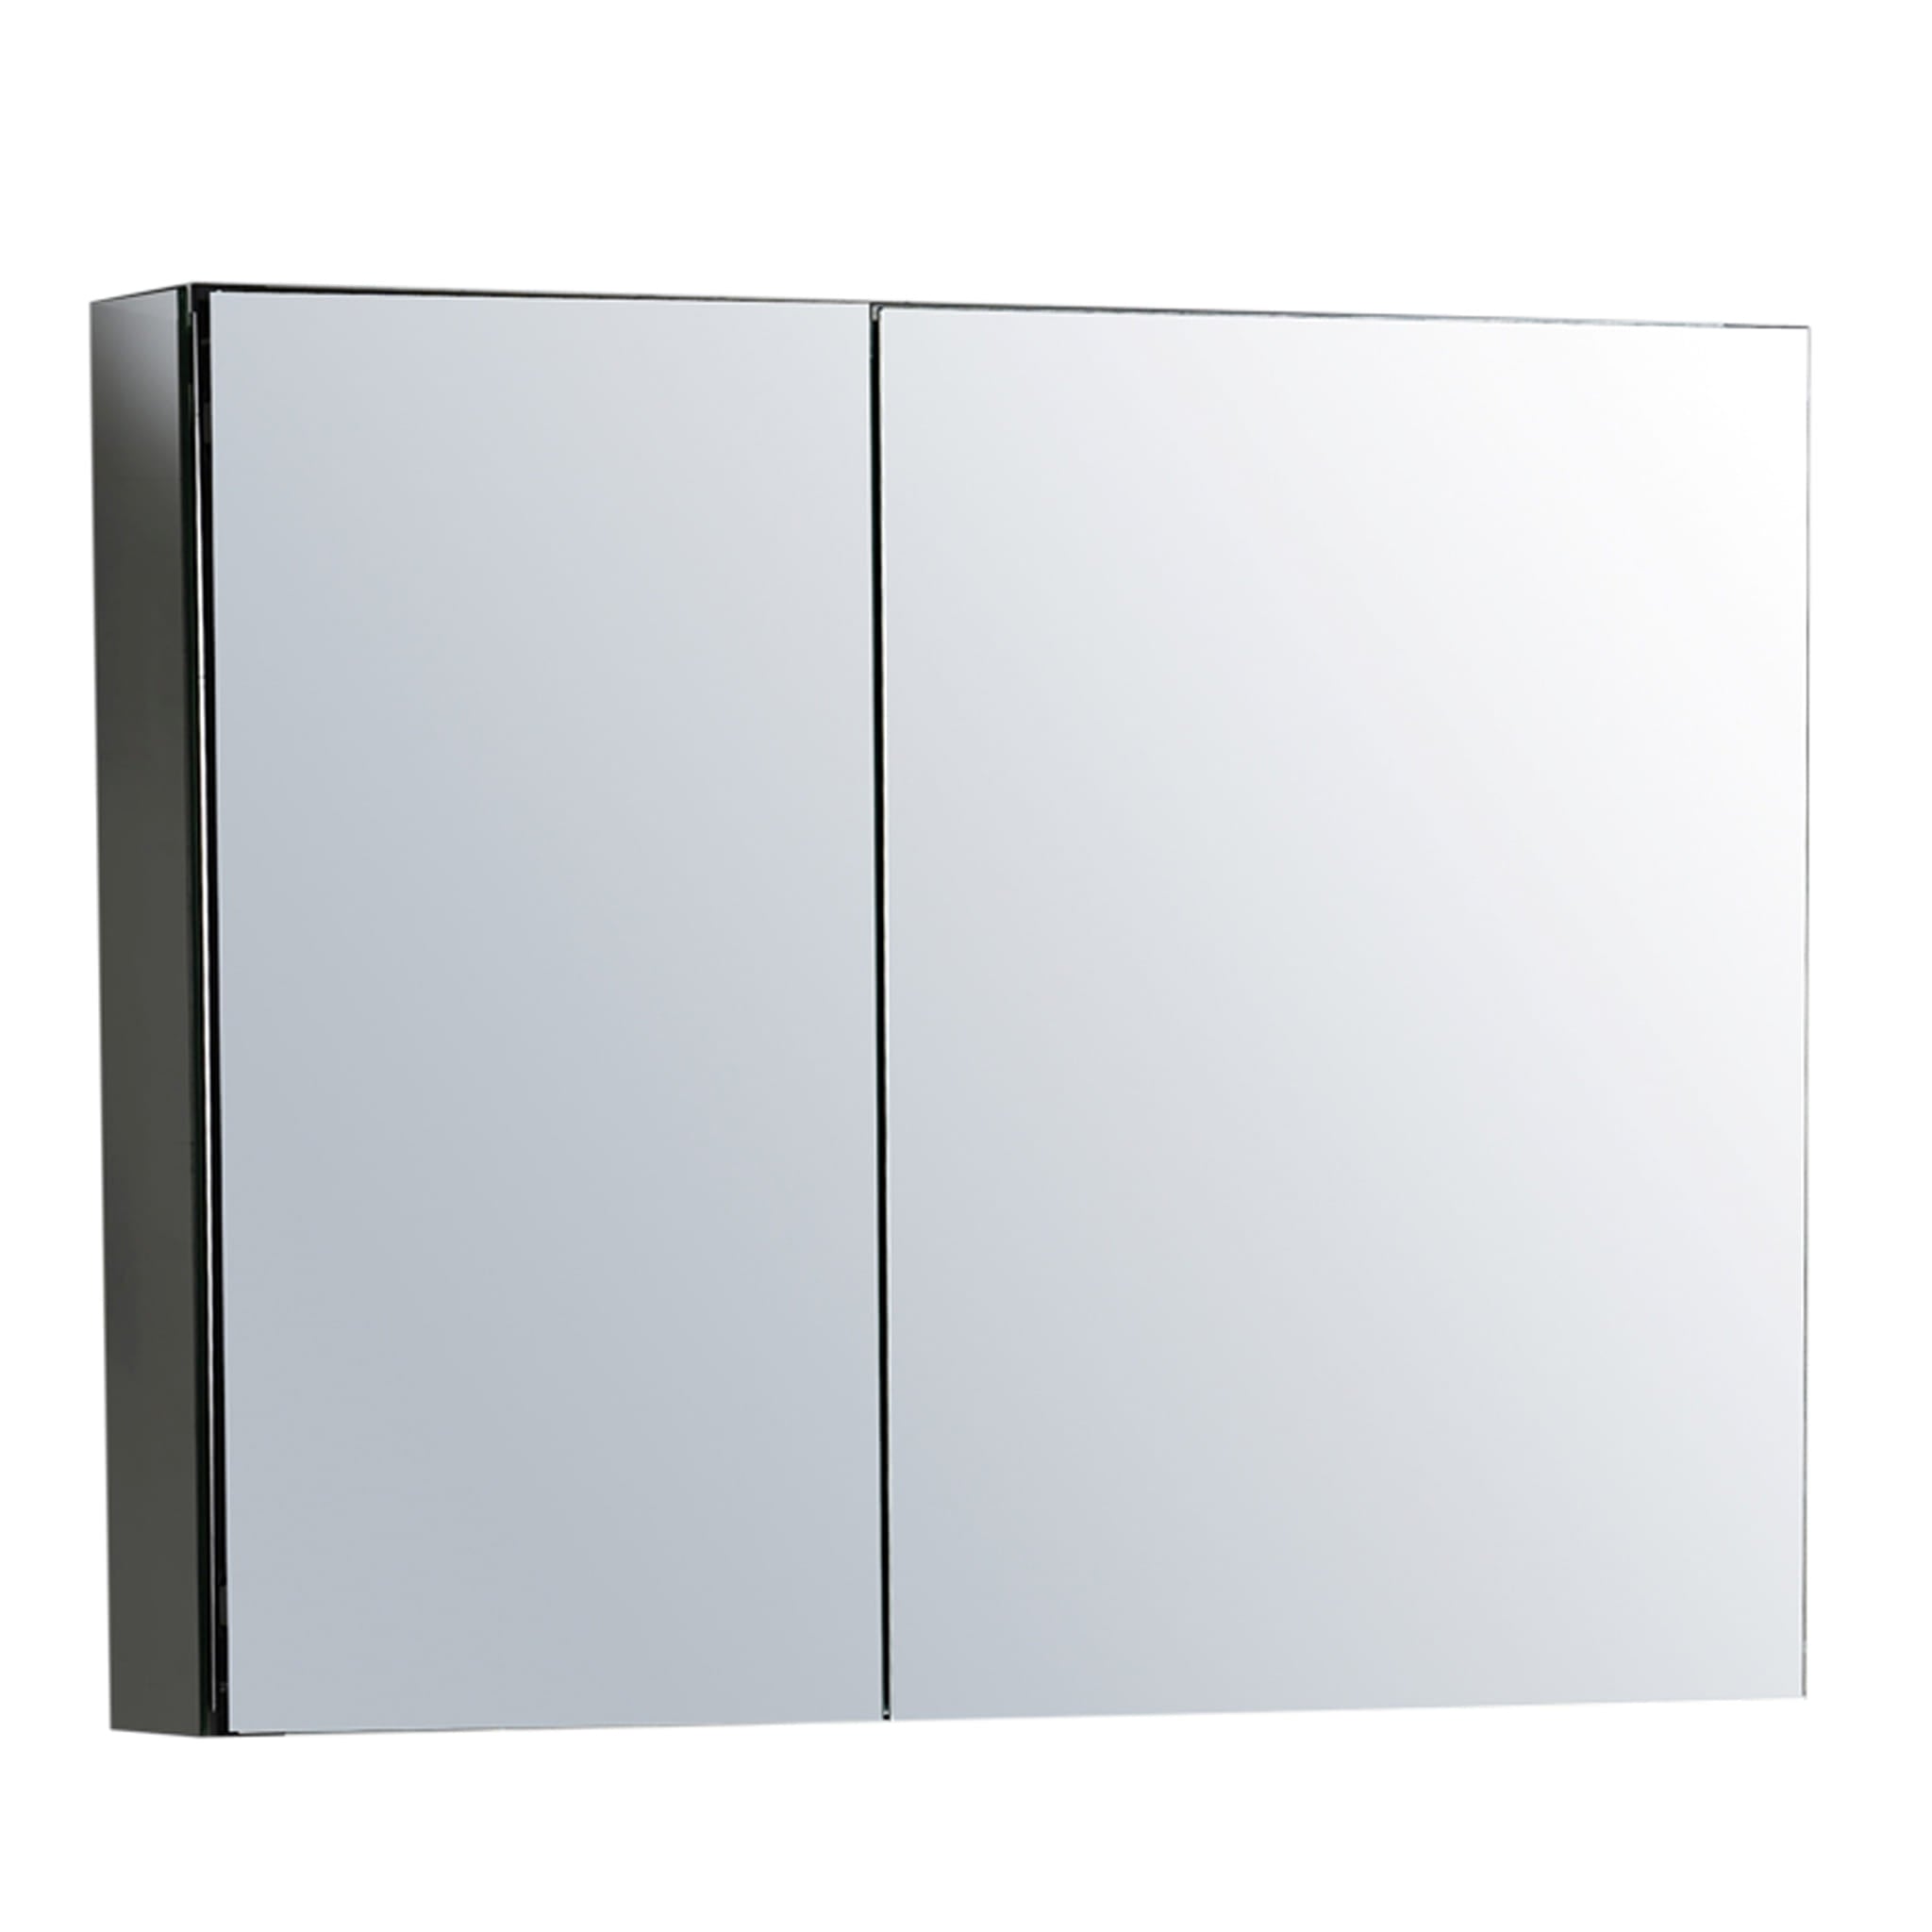 Aquamoon MM30 Frameless Plain 30" x26" Bathroom Medicine Cabinet Mirror Recess or Wall Mounted Installation